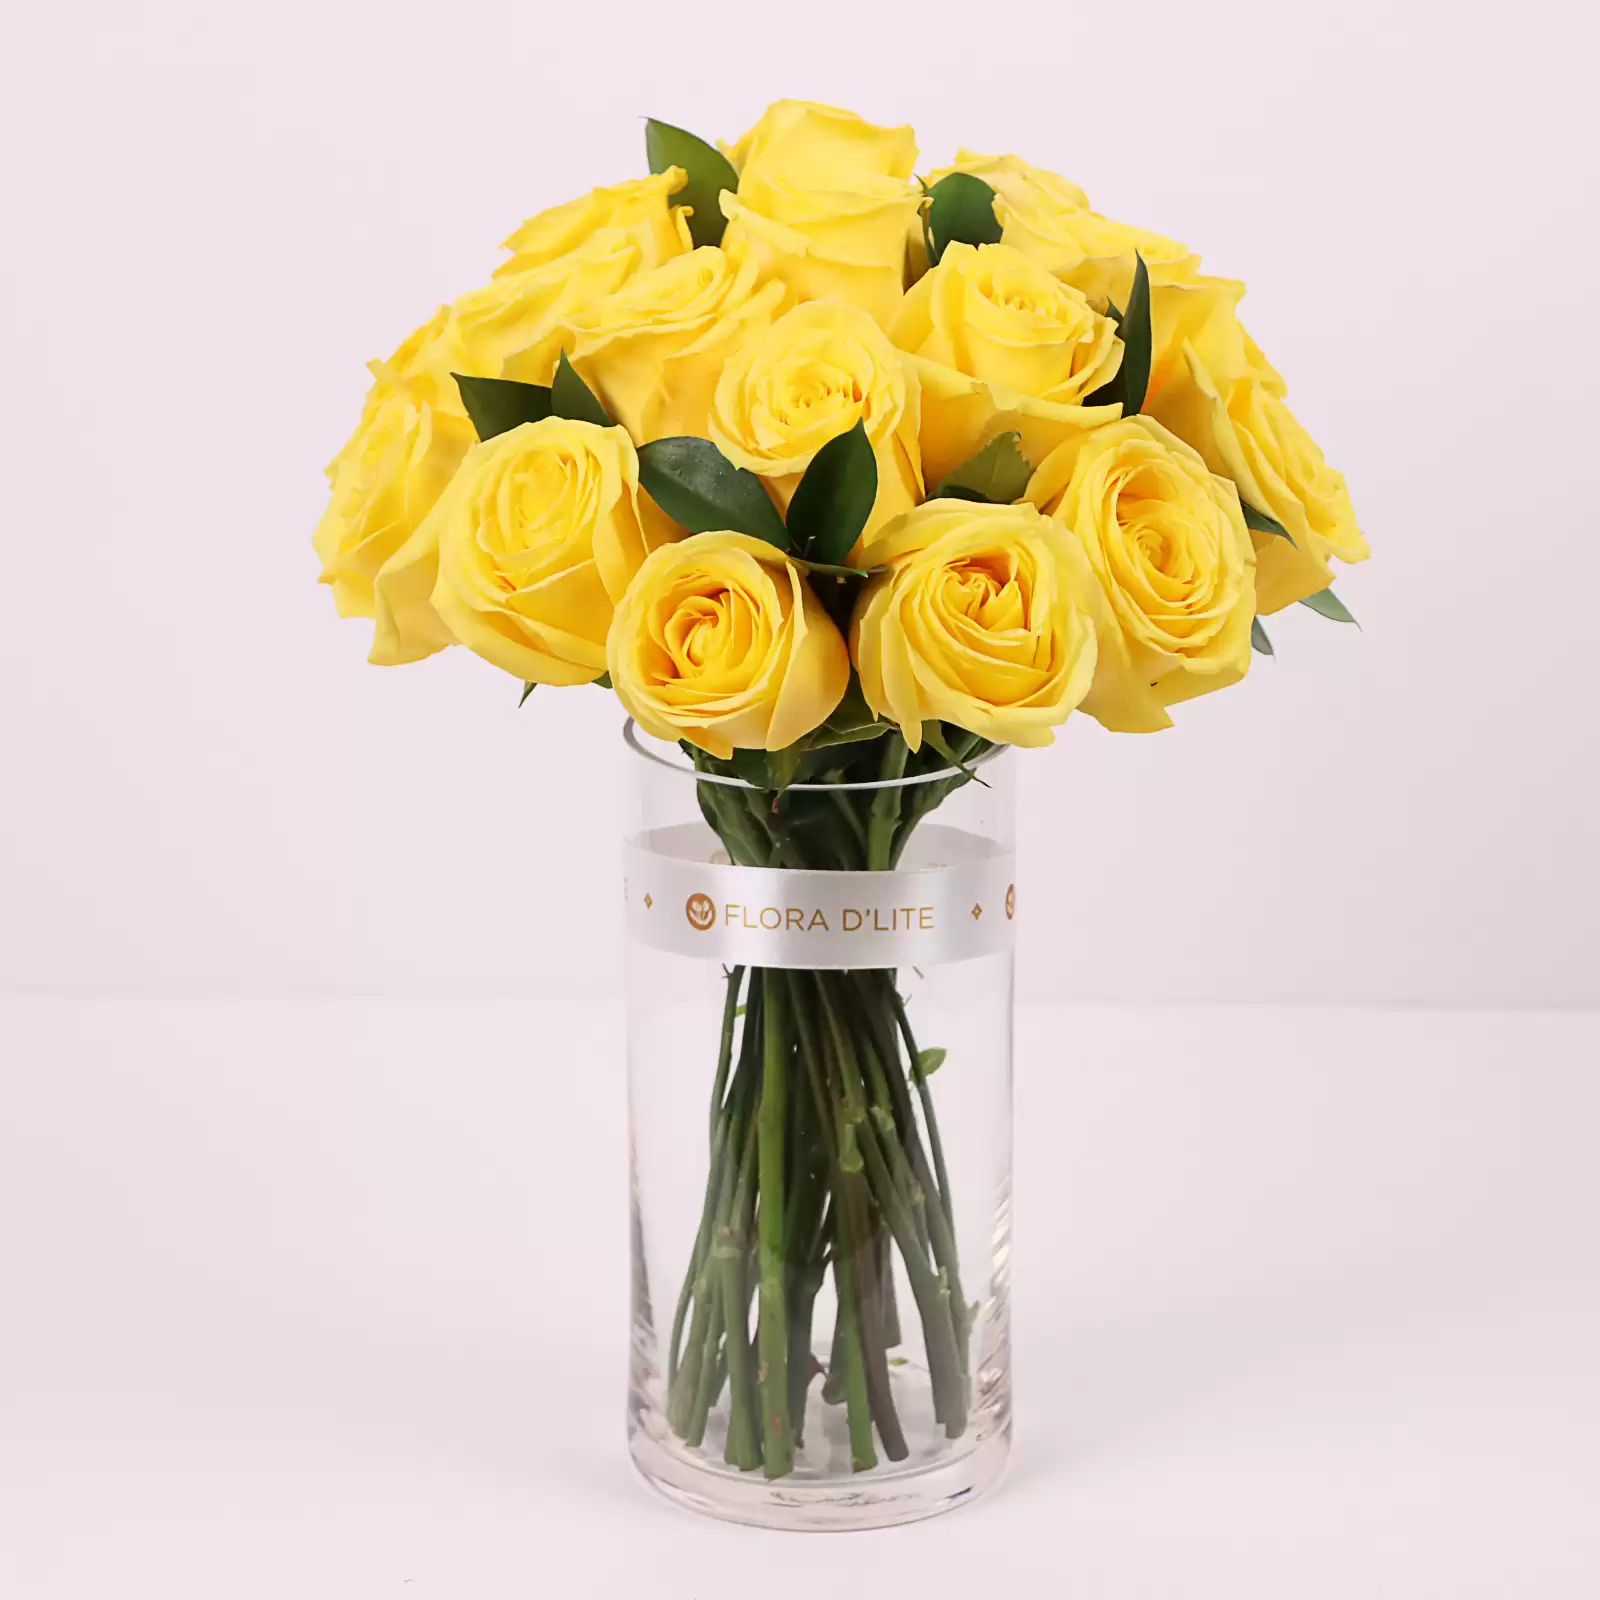 Morning Glory Yellow Roses Vase Arrangement - Flora D'lite